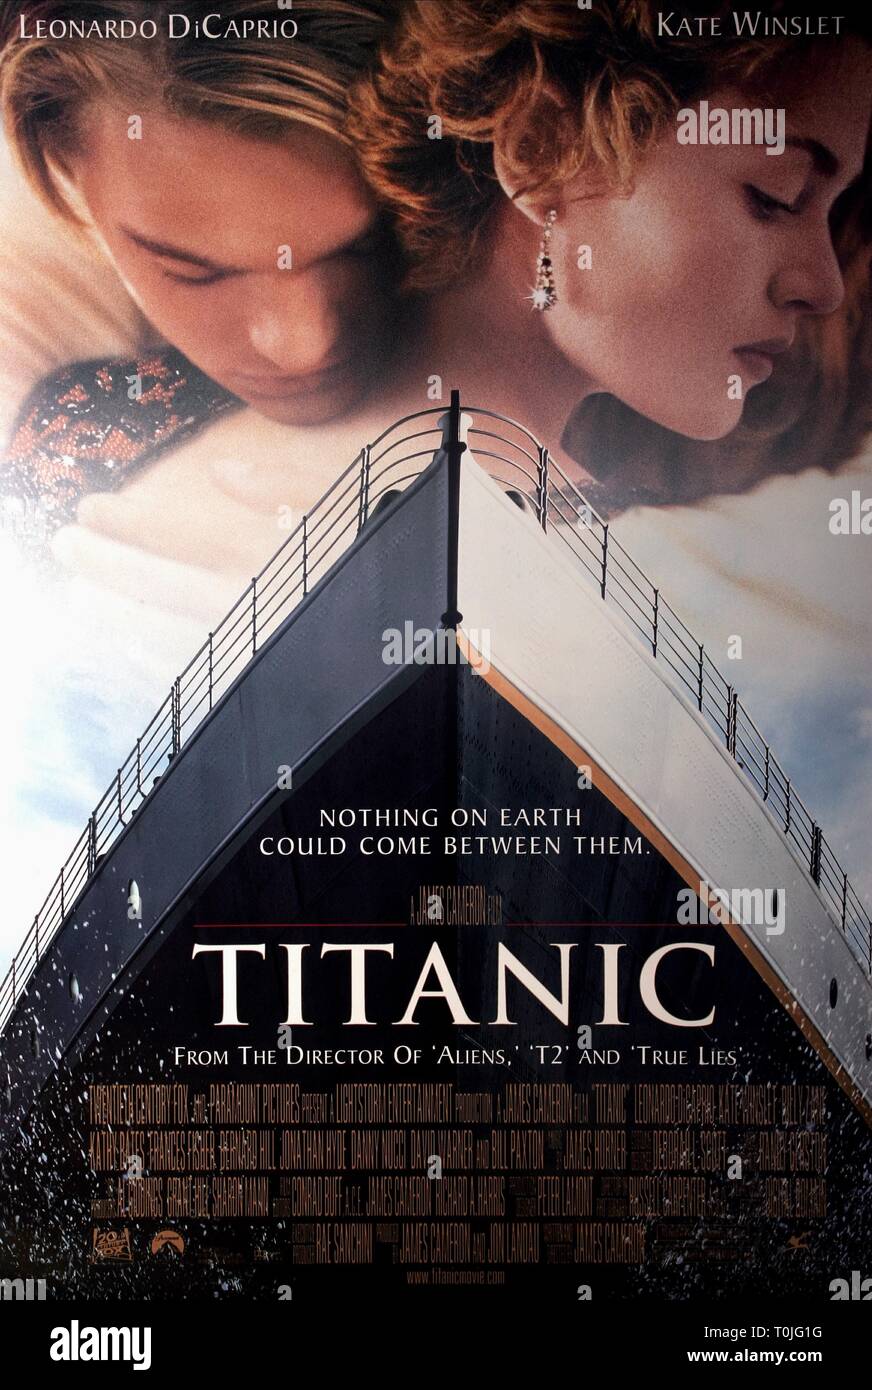 Leonardo Dicaprio Titanic Poster